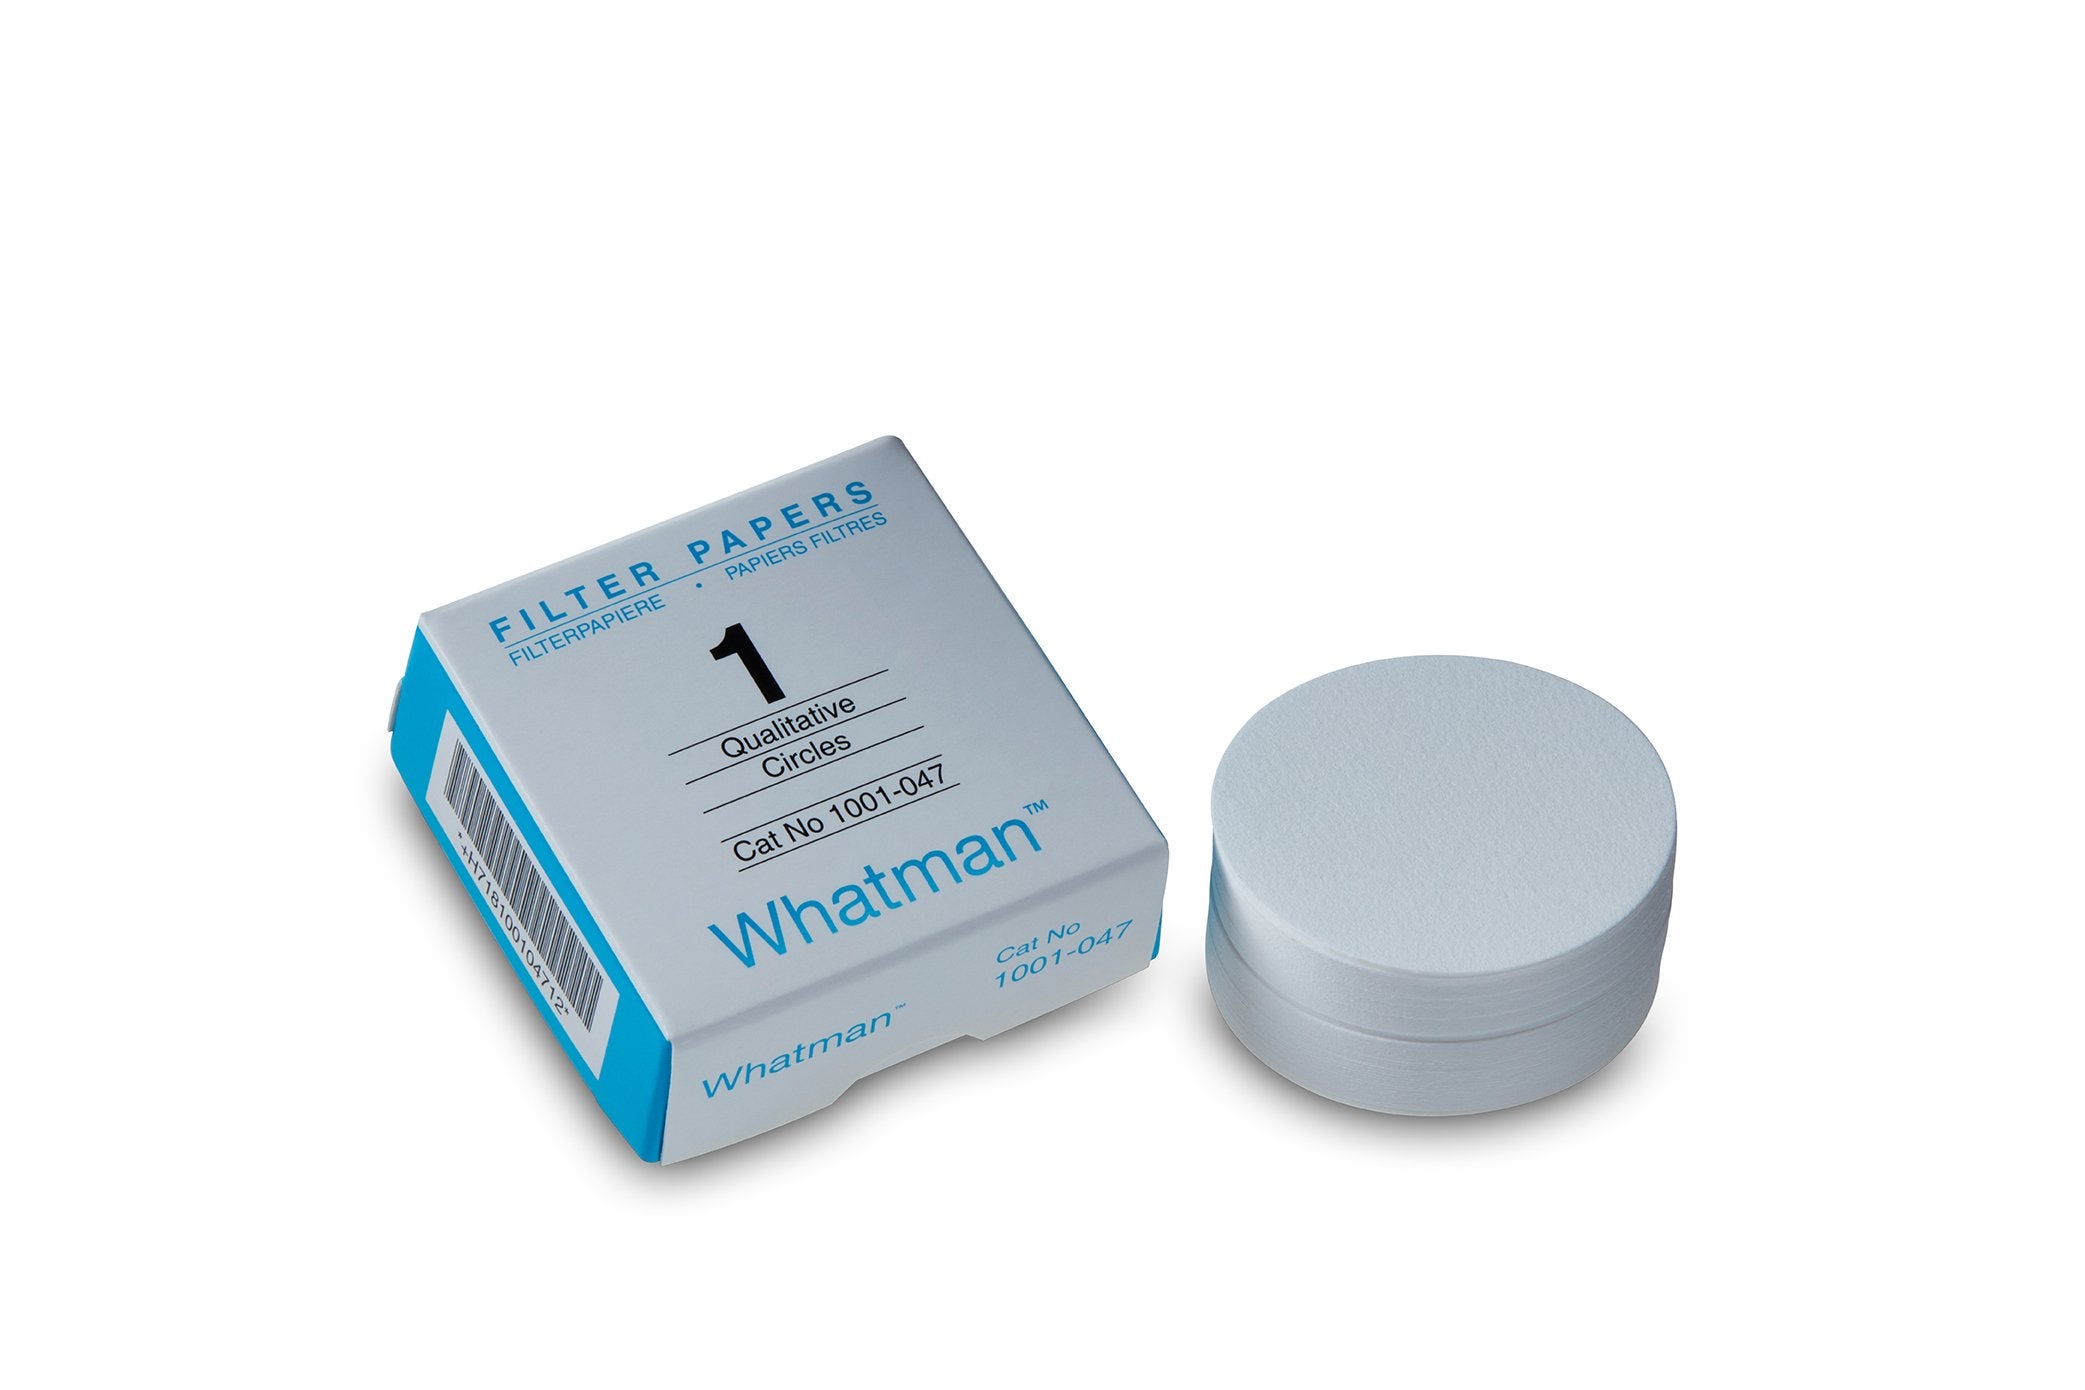 Whatman 3001-672 Cellulose Chromatography Paper, Grade 1 Chr Roll, 10.0cm x 100m, 1/pk